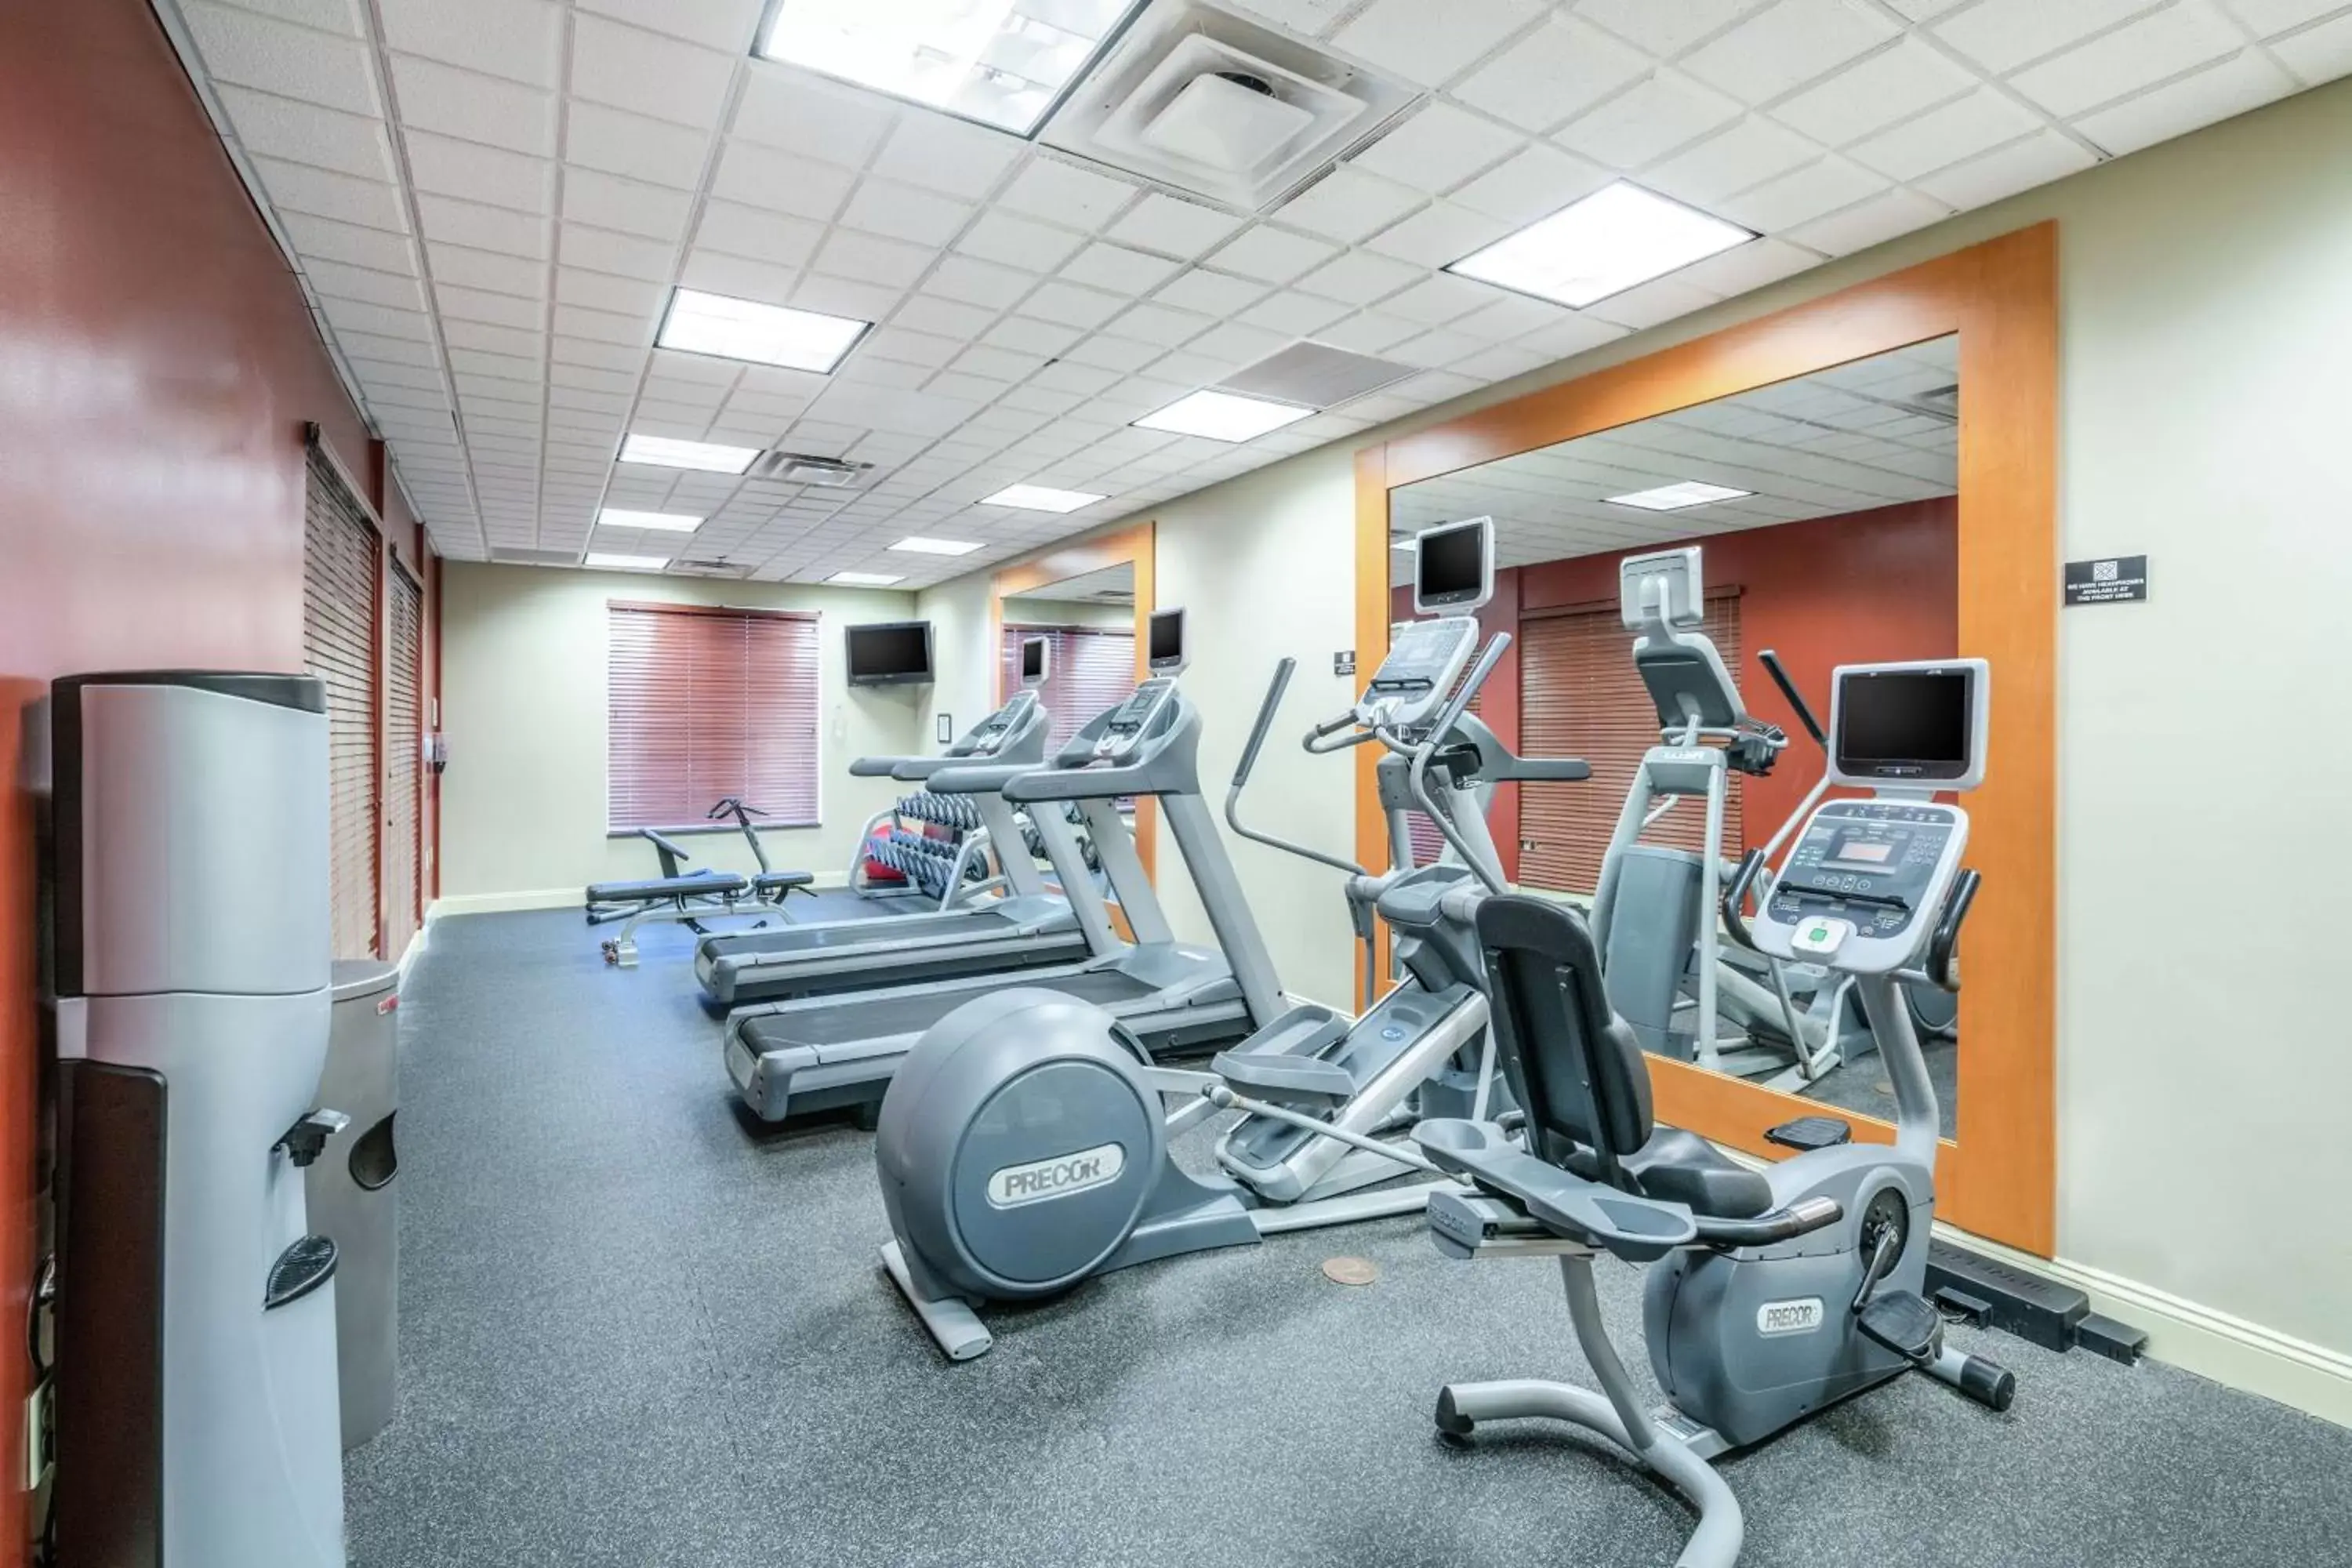 Fitness centre/facilities, Fitness Center/Facilities in Hilton Garden Inn Richmond Airport